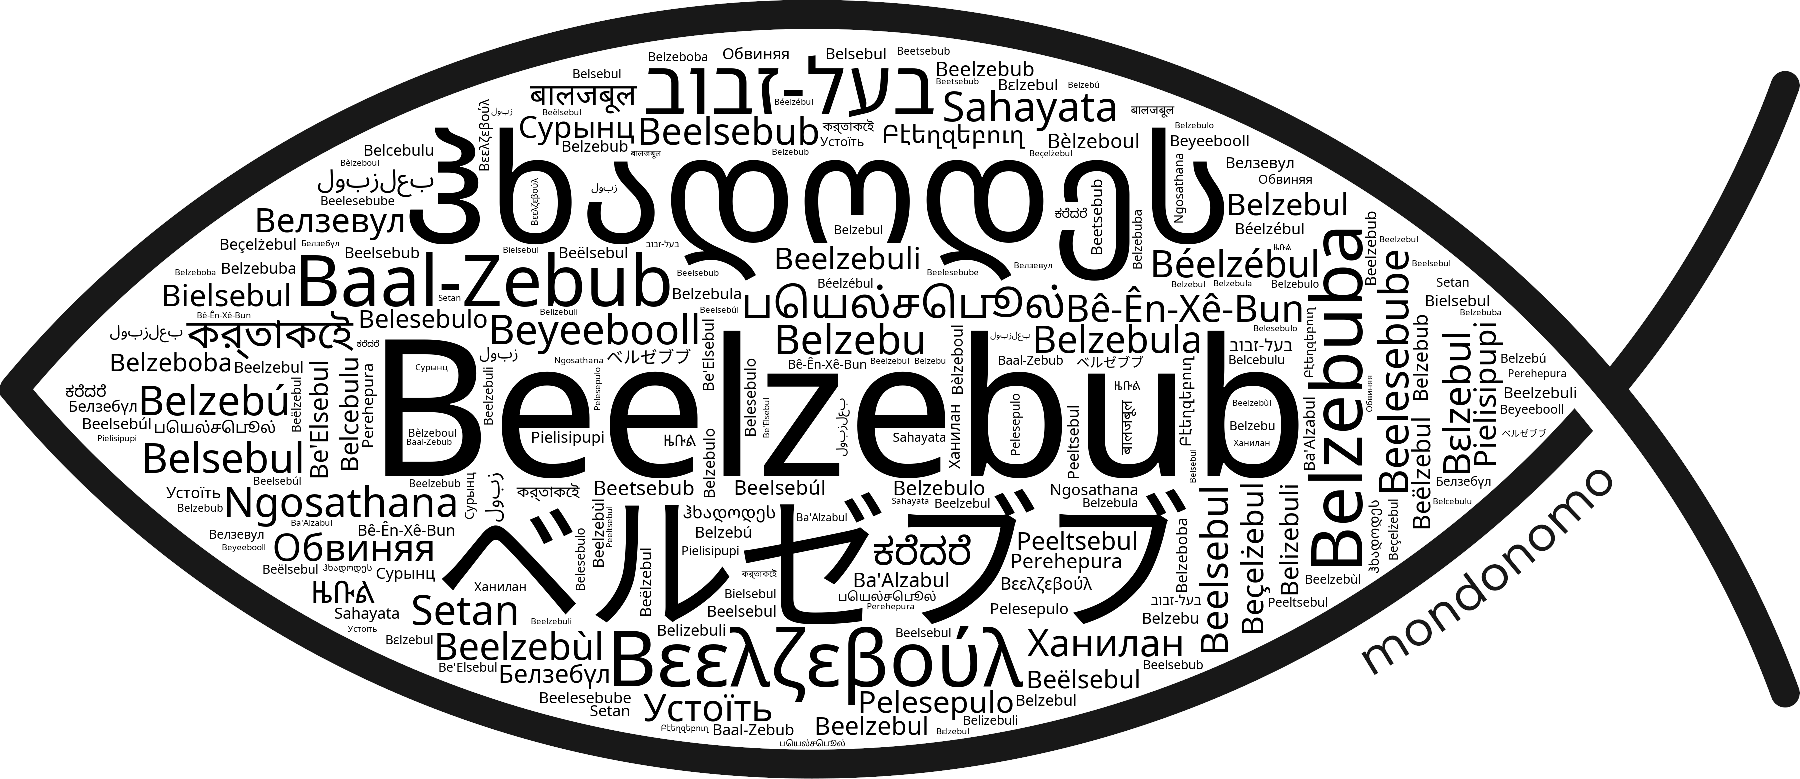 Name Beelzebub in the world's Bibles